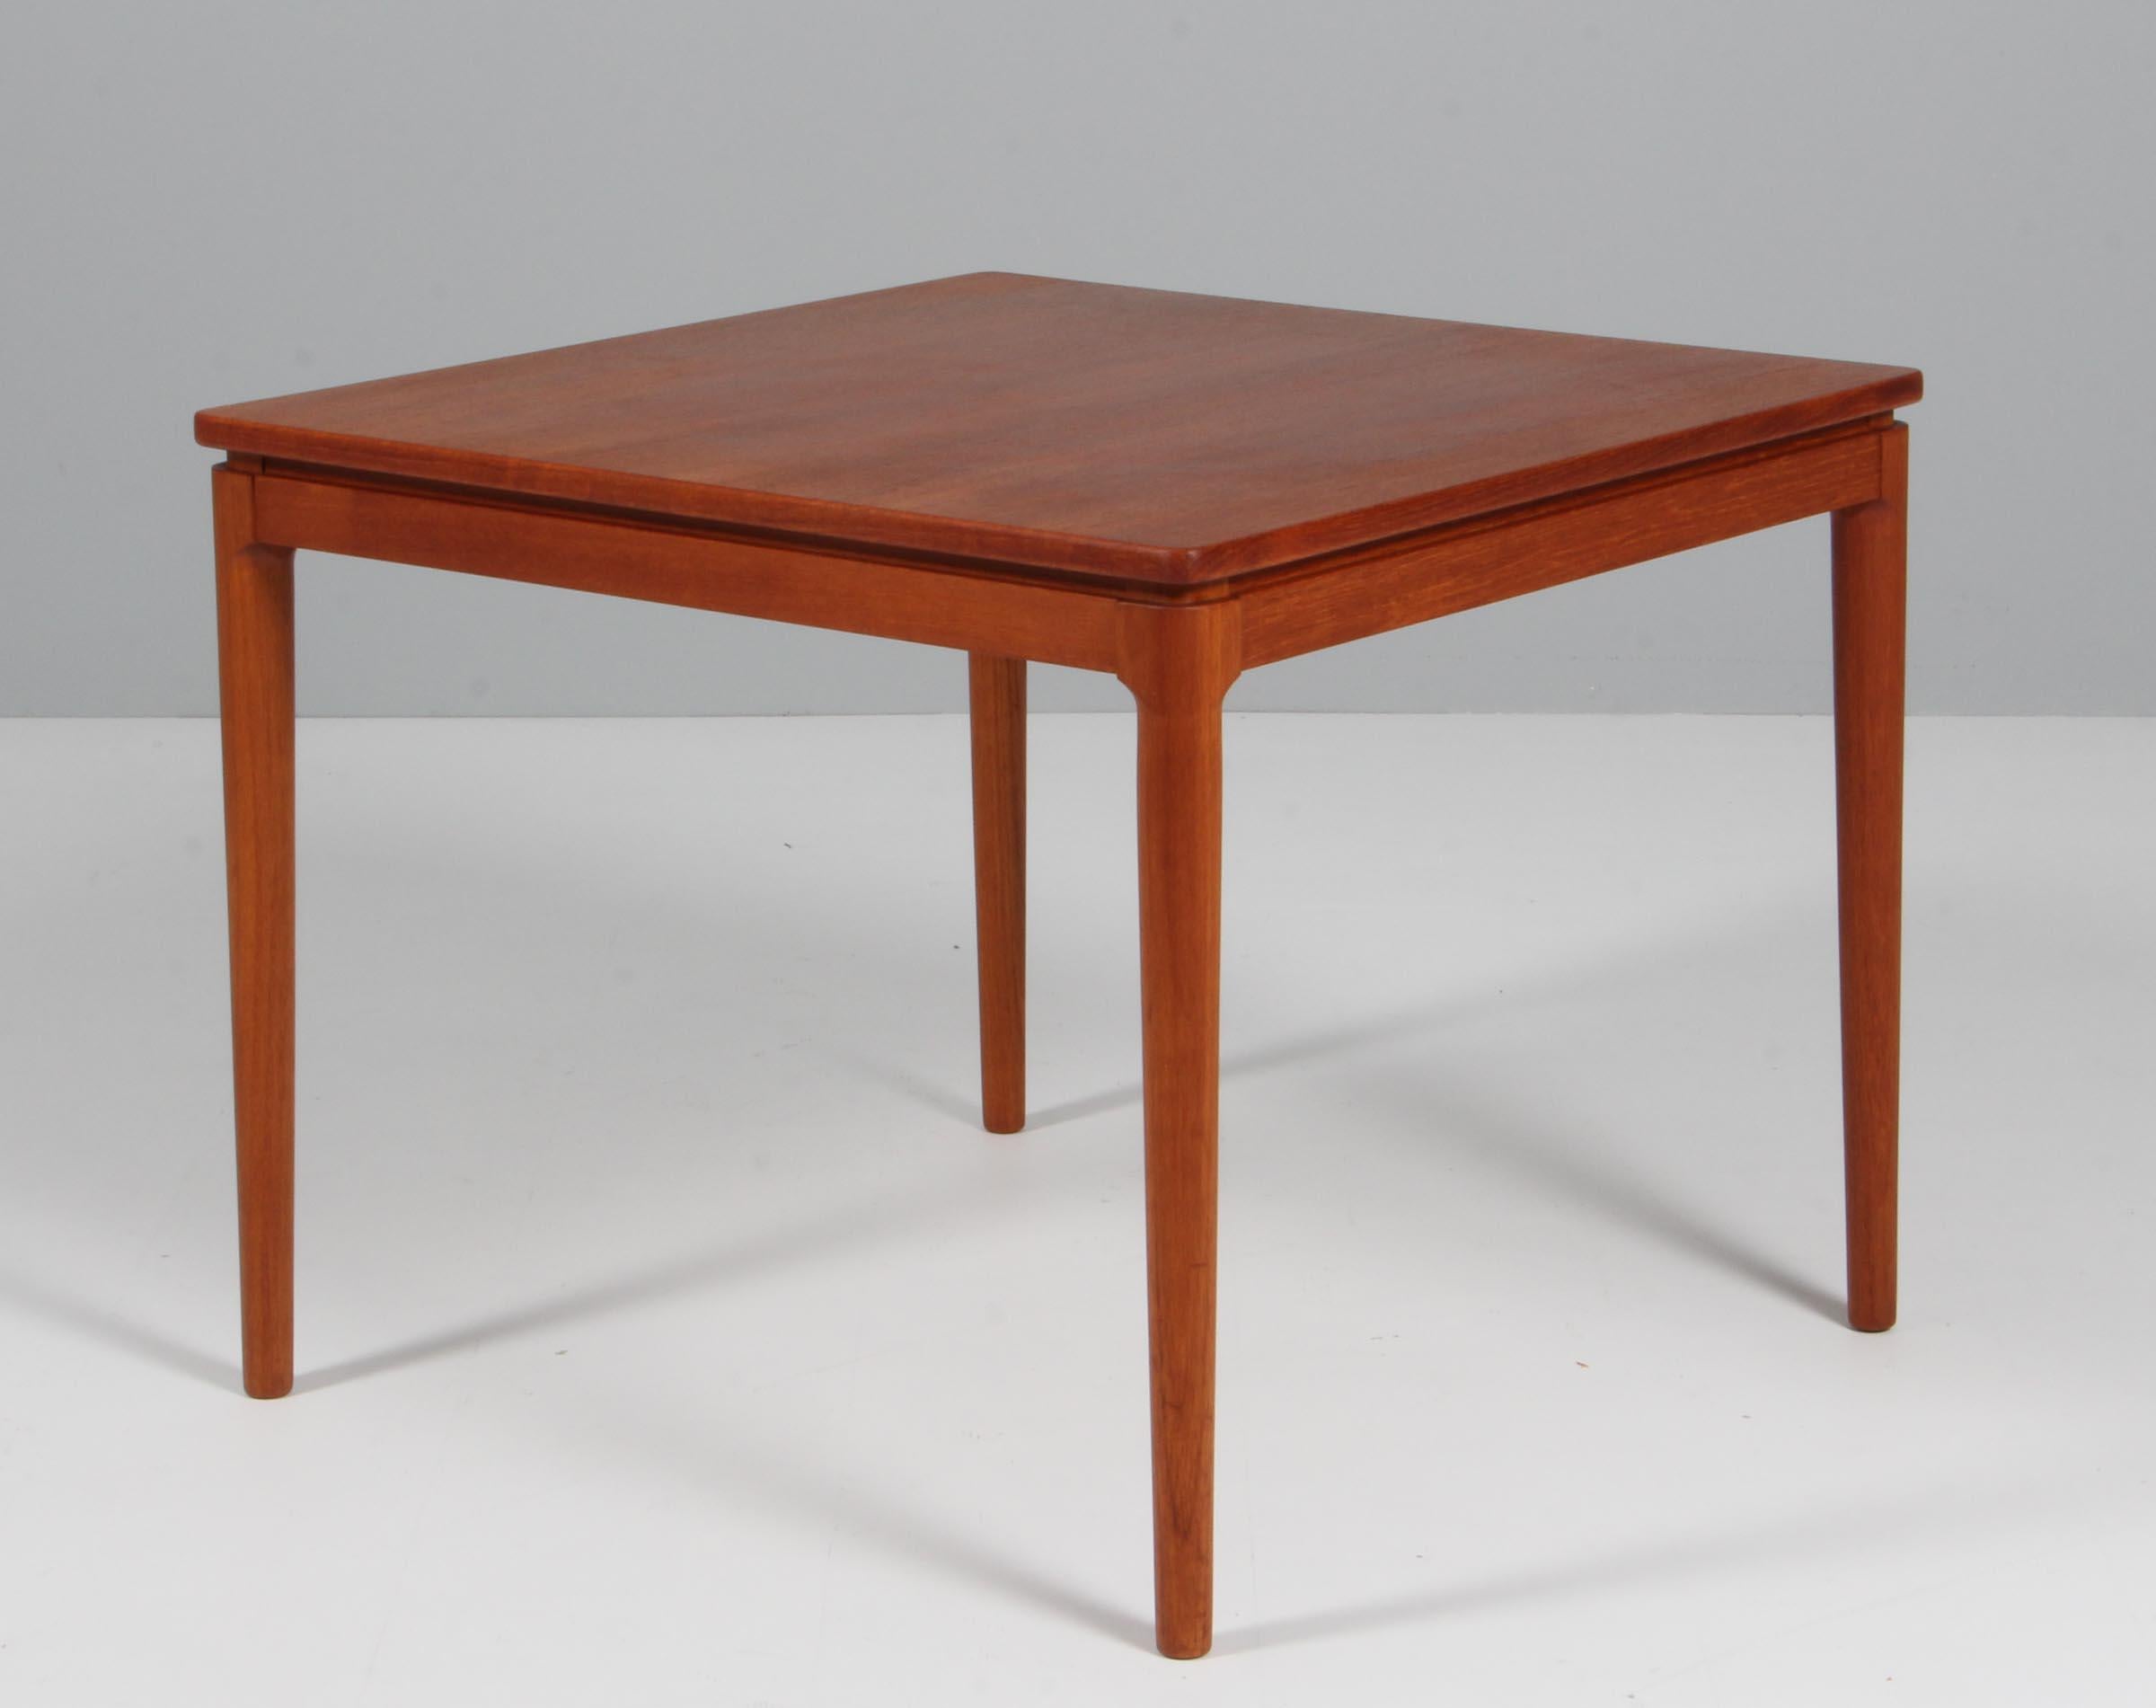 Ole Wanscher coffee table of veneered teak.

Model Senator, made by Cado.

